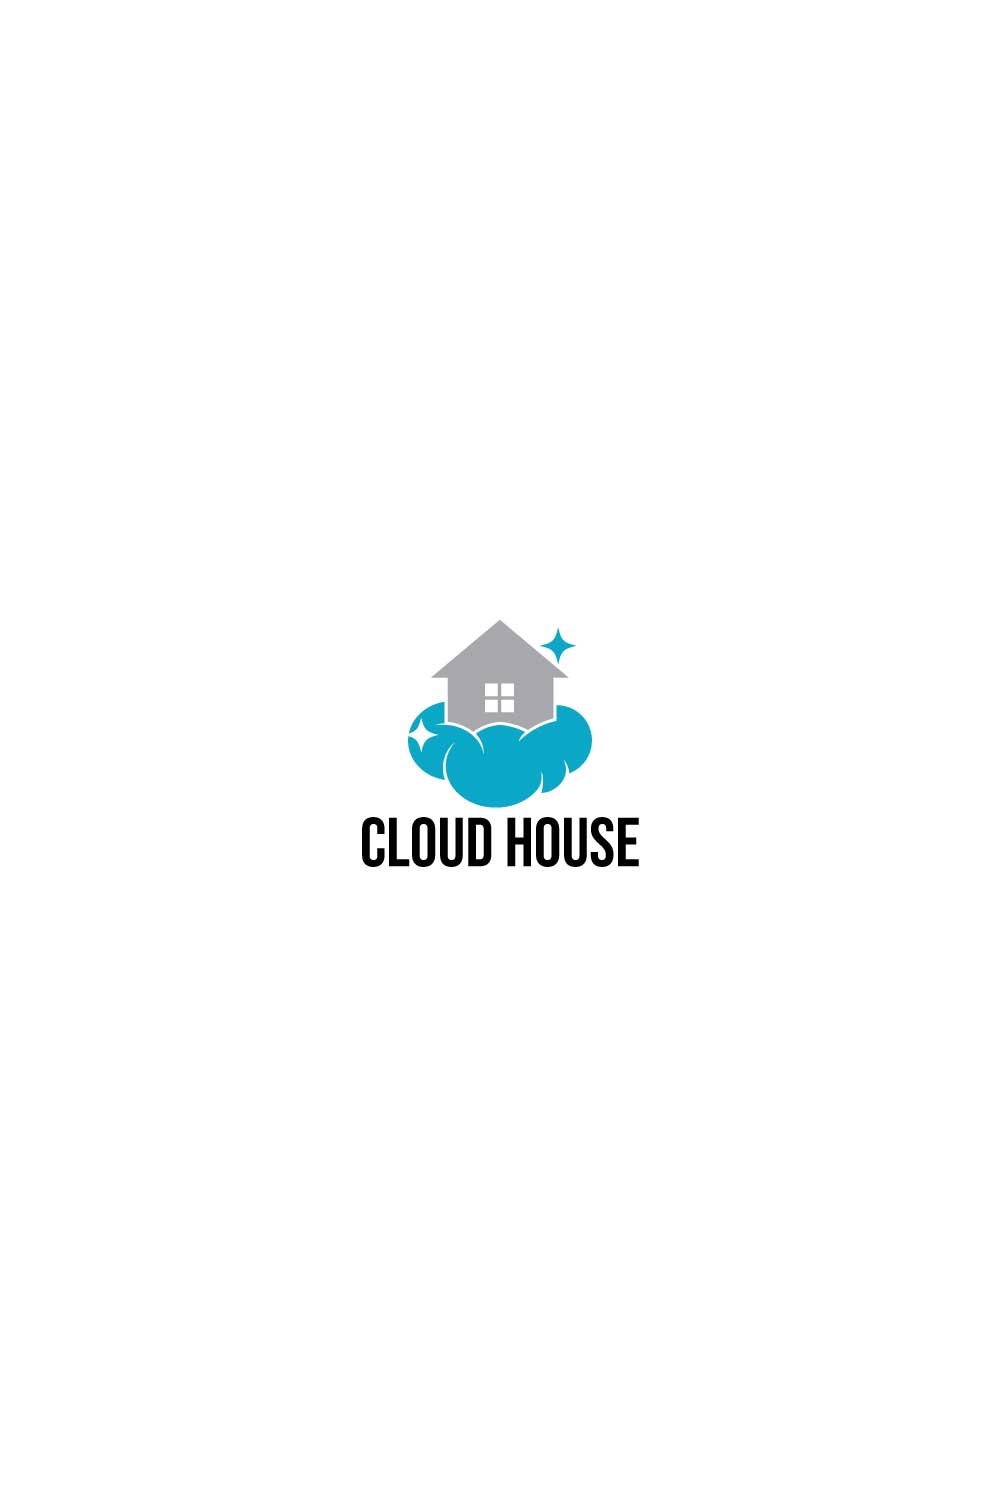 Minimal Flying Cloud House logo design pinterest preview image.